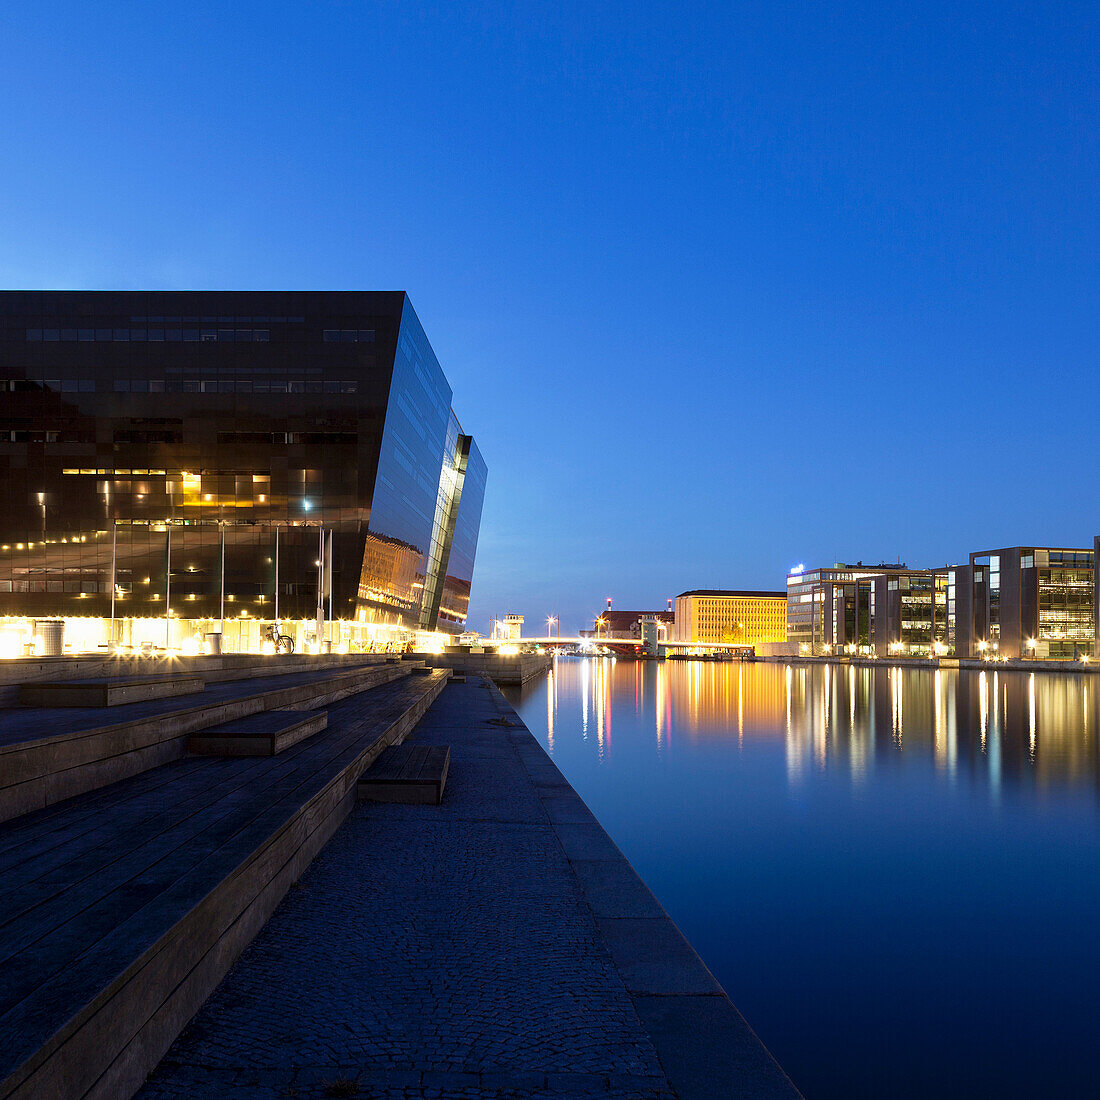 Lit buildings reflected in urban canal. Left: Royal Danish Library Det Kongelige Bibliotek, Black Diamond building, Copenhagen, Denmark